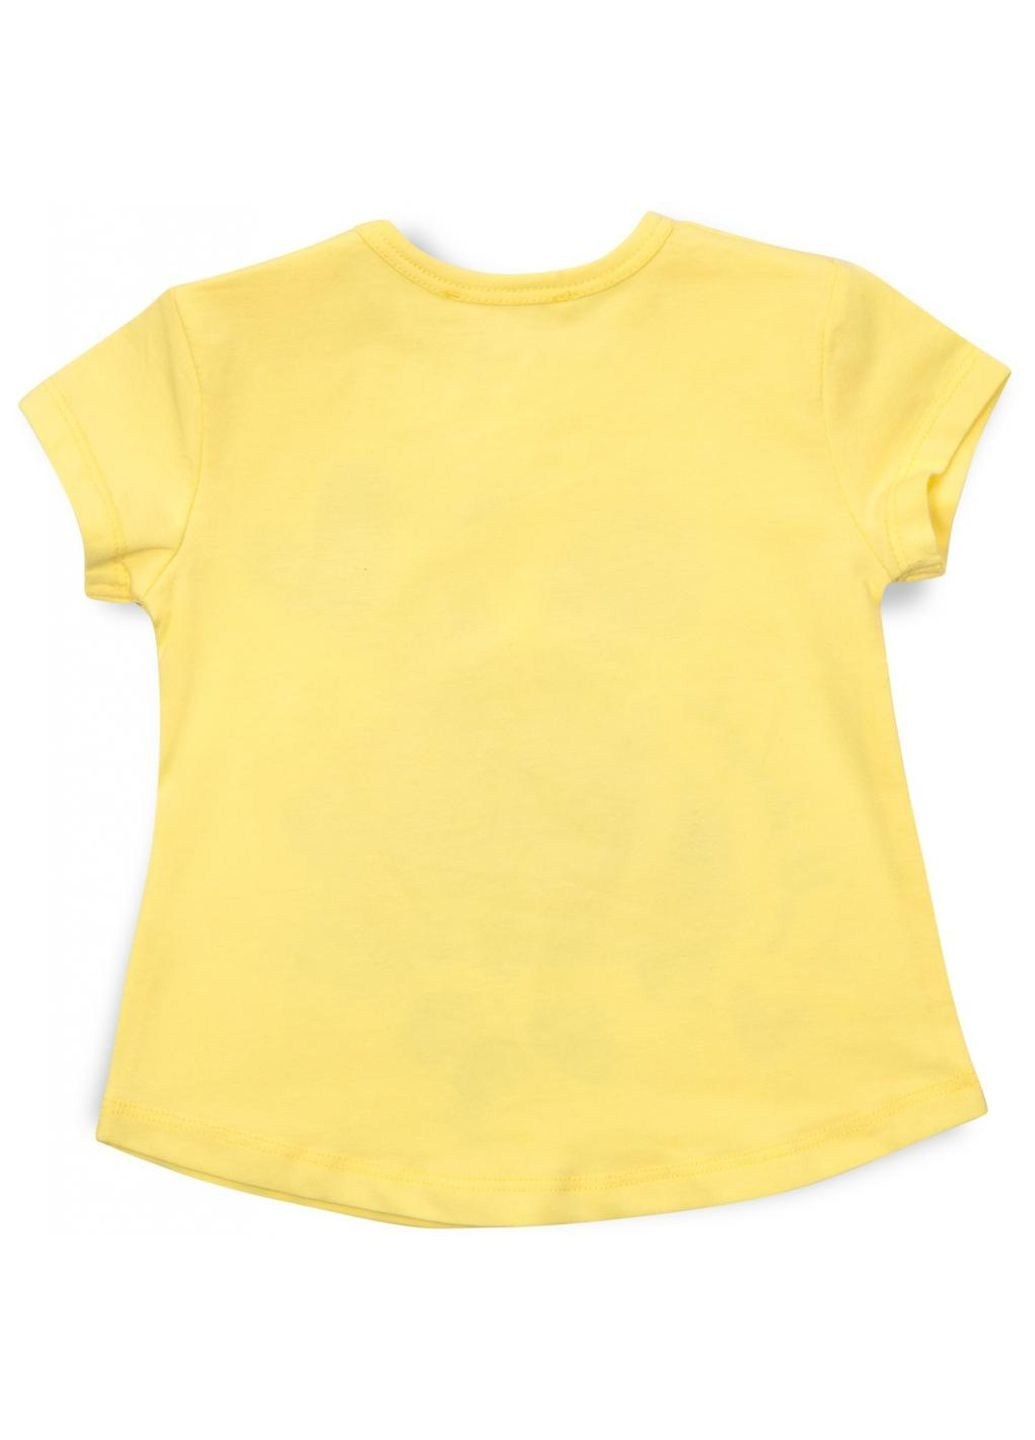 Желтая летняя футболка детская "best friends" (14114-104g-yellow) Breeze